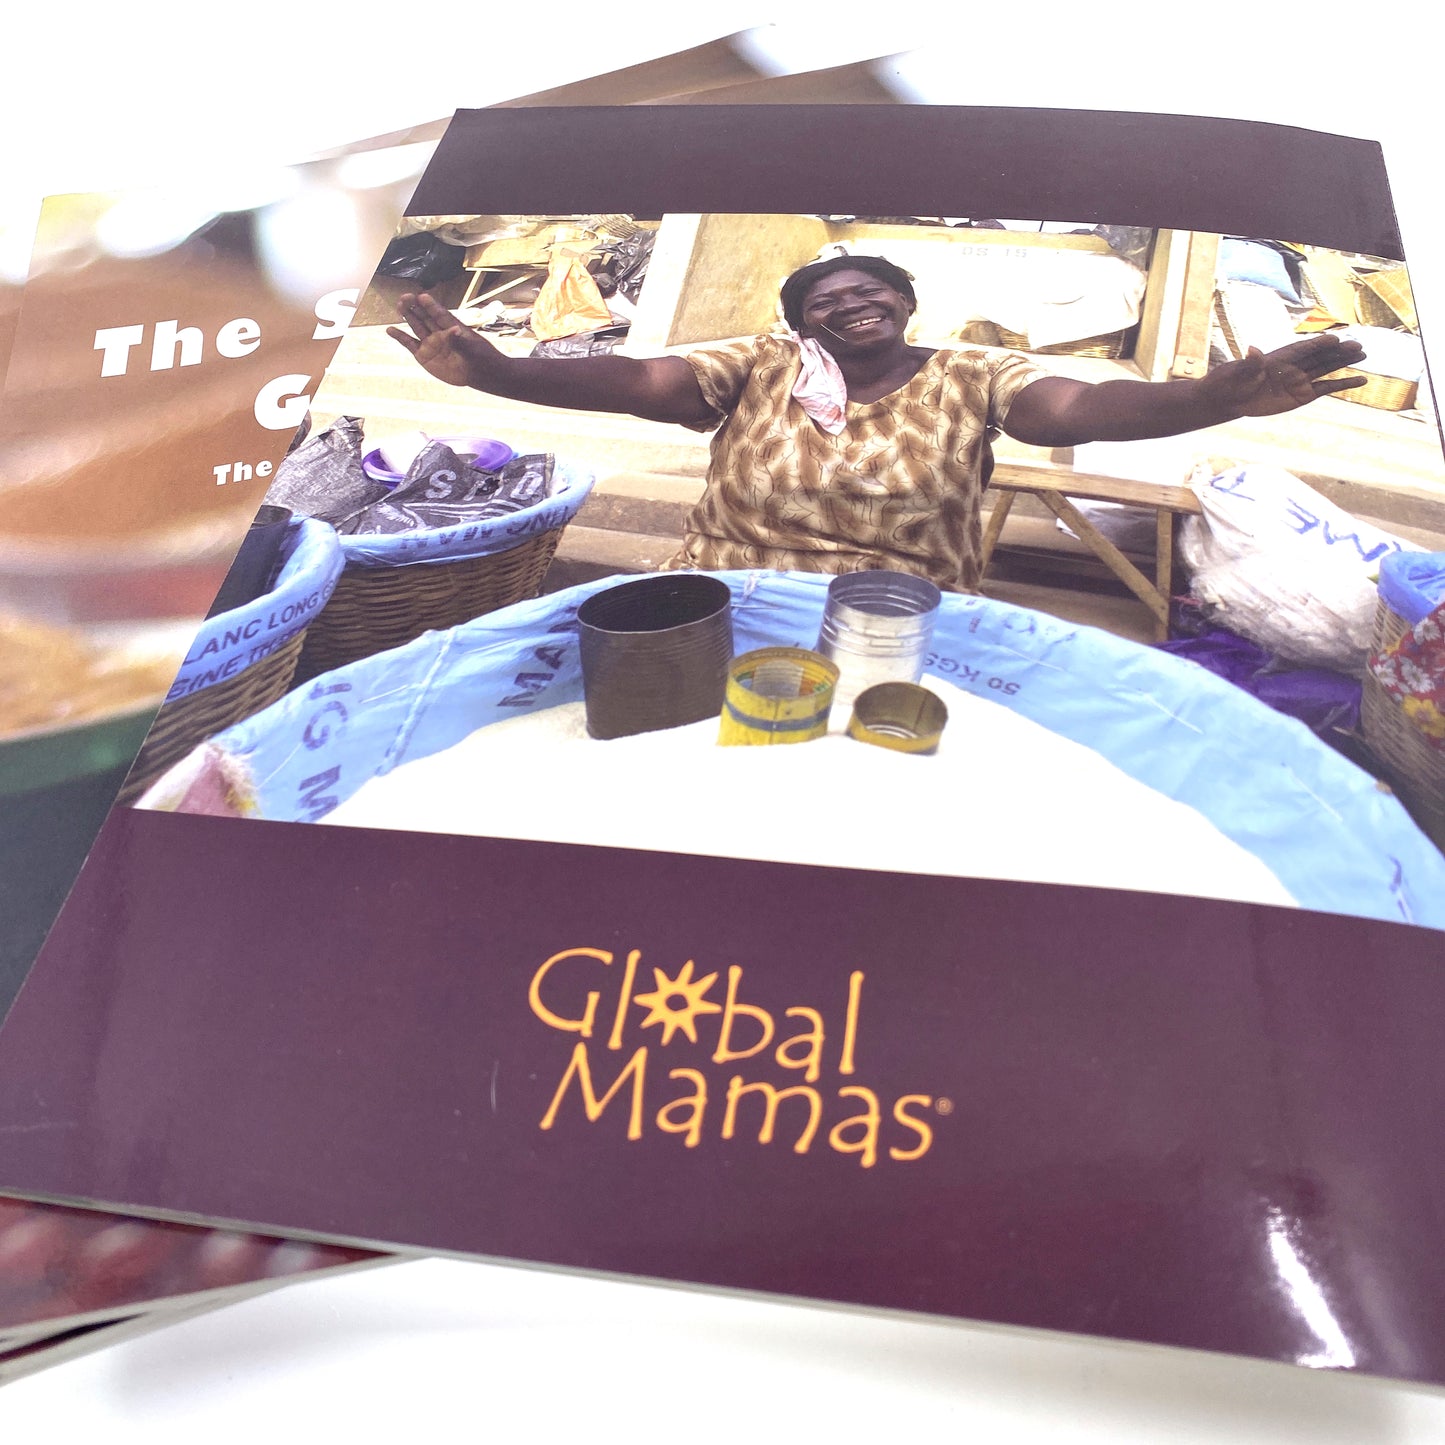 The Spice of Ghana Life: Cookbook